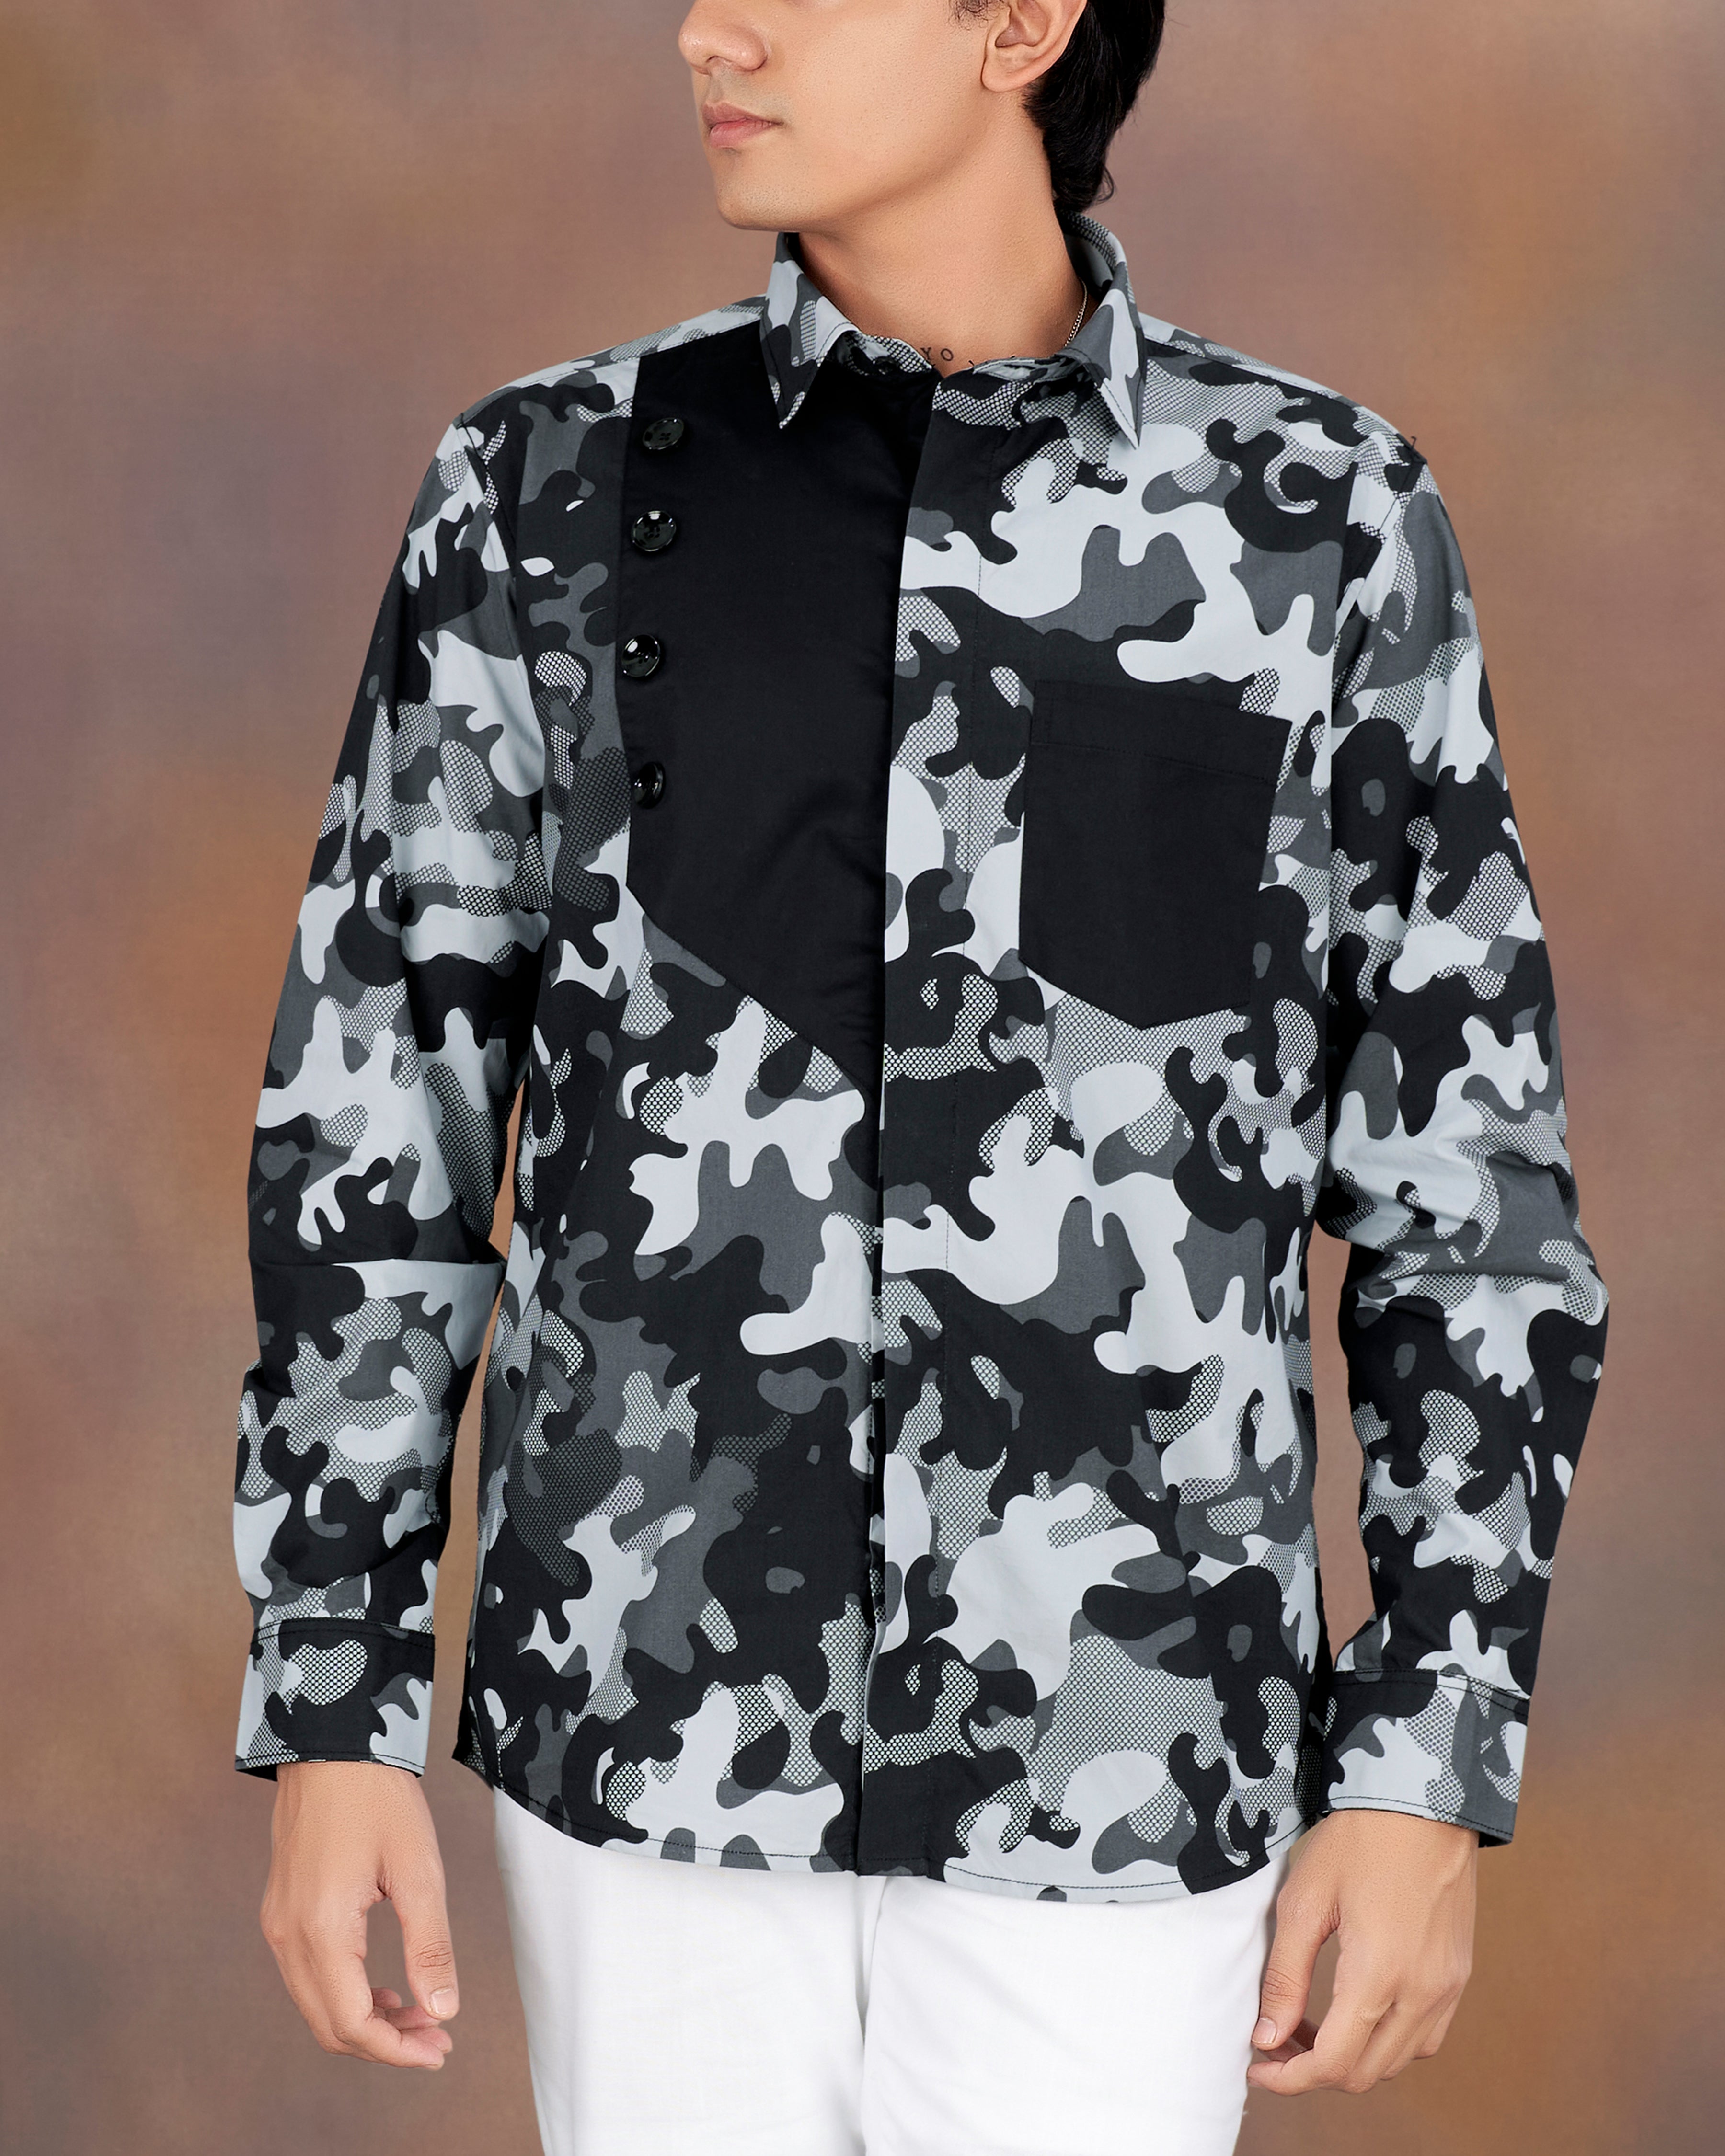 Gunmetal Gray with Black and White Camouflage Printed Premium Tencel Designer Shirt